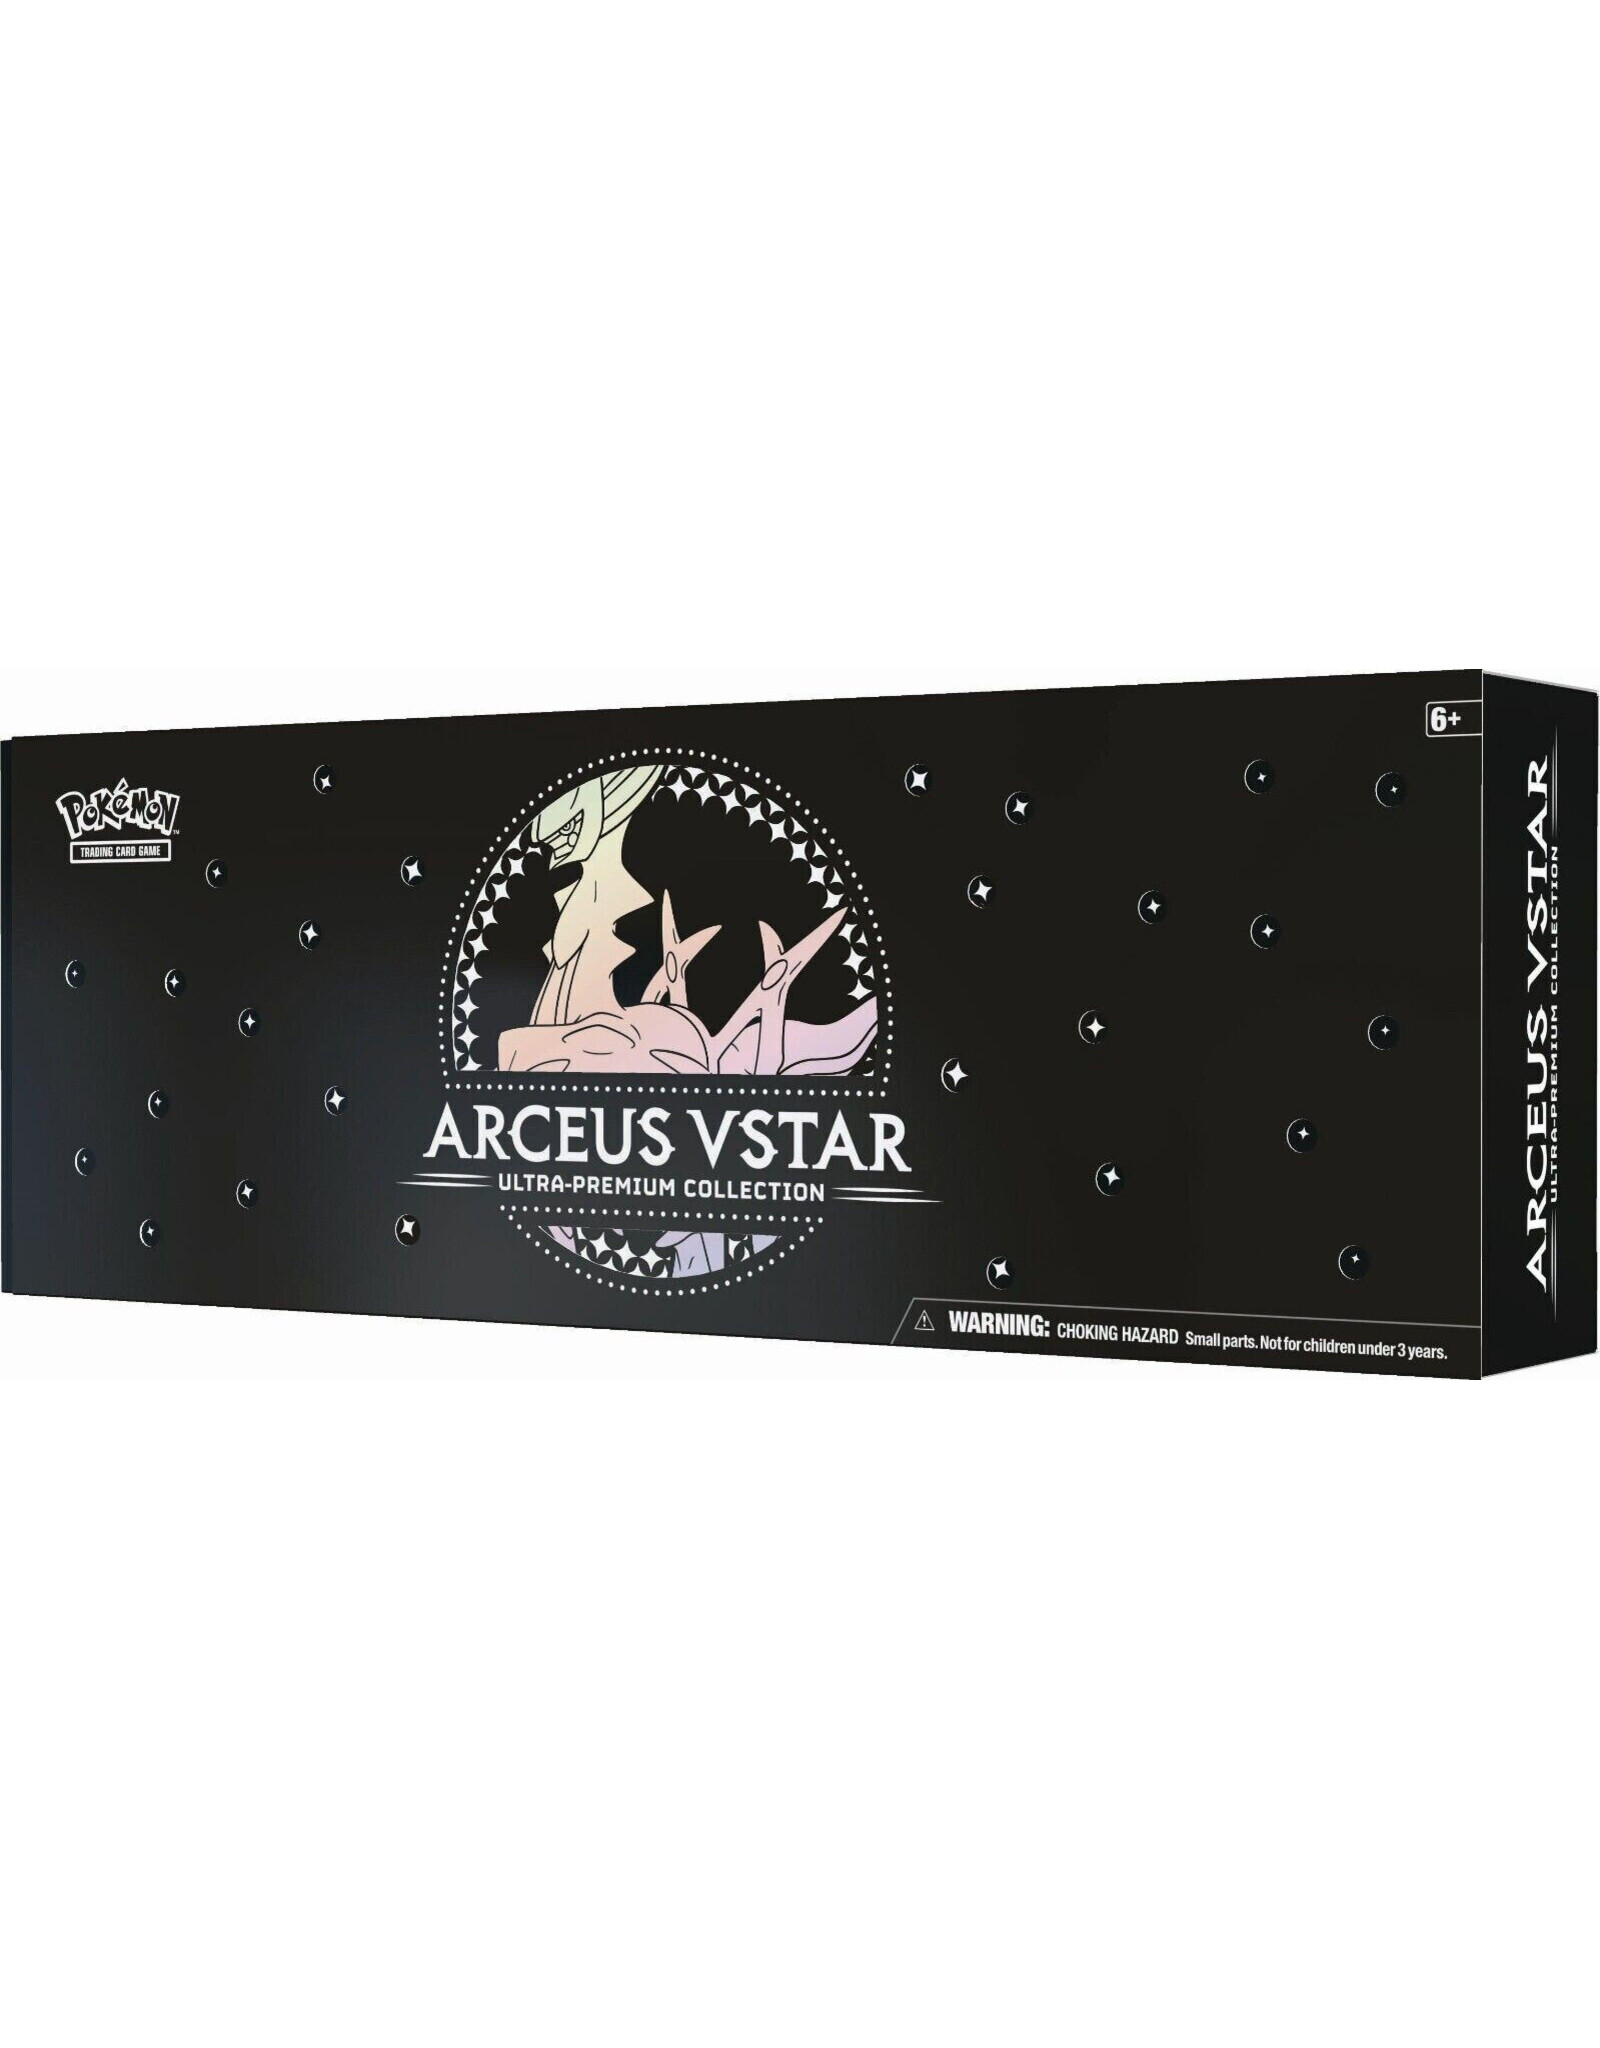 Arceus VSTAR Ultra-Premium Collection GameStop USA Exclusive